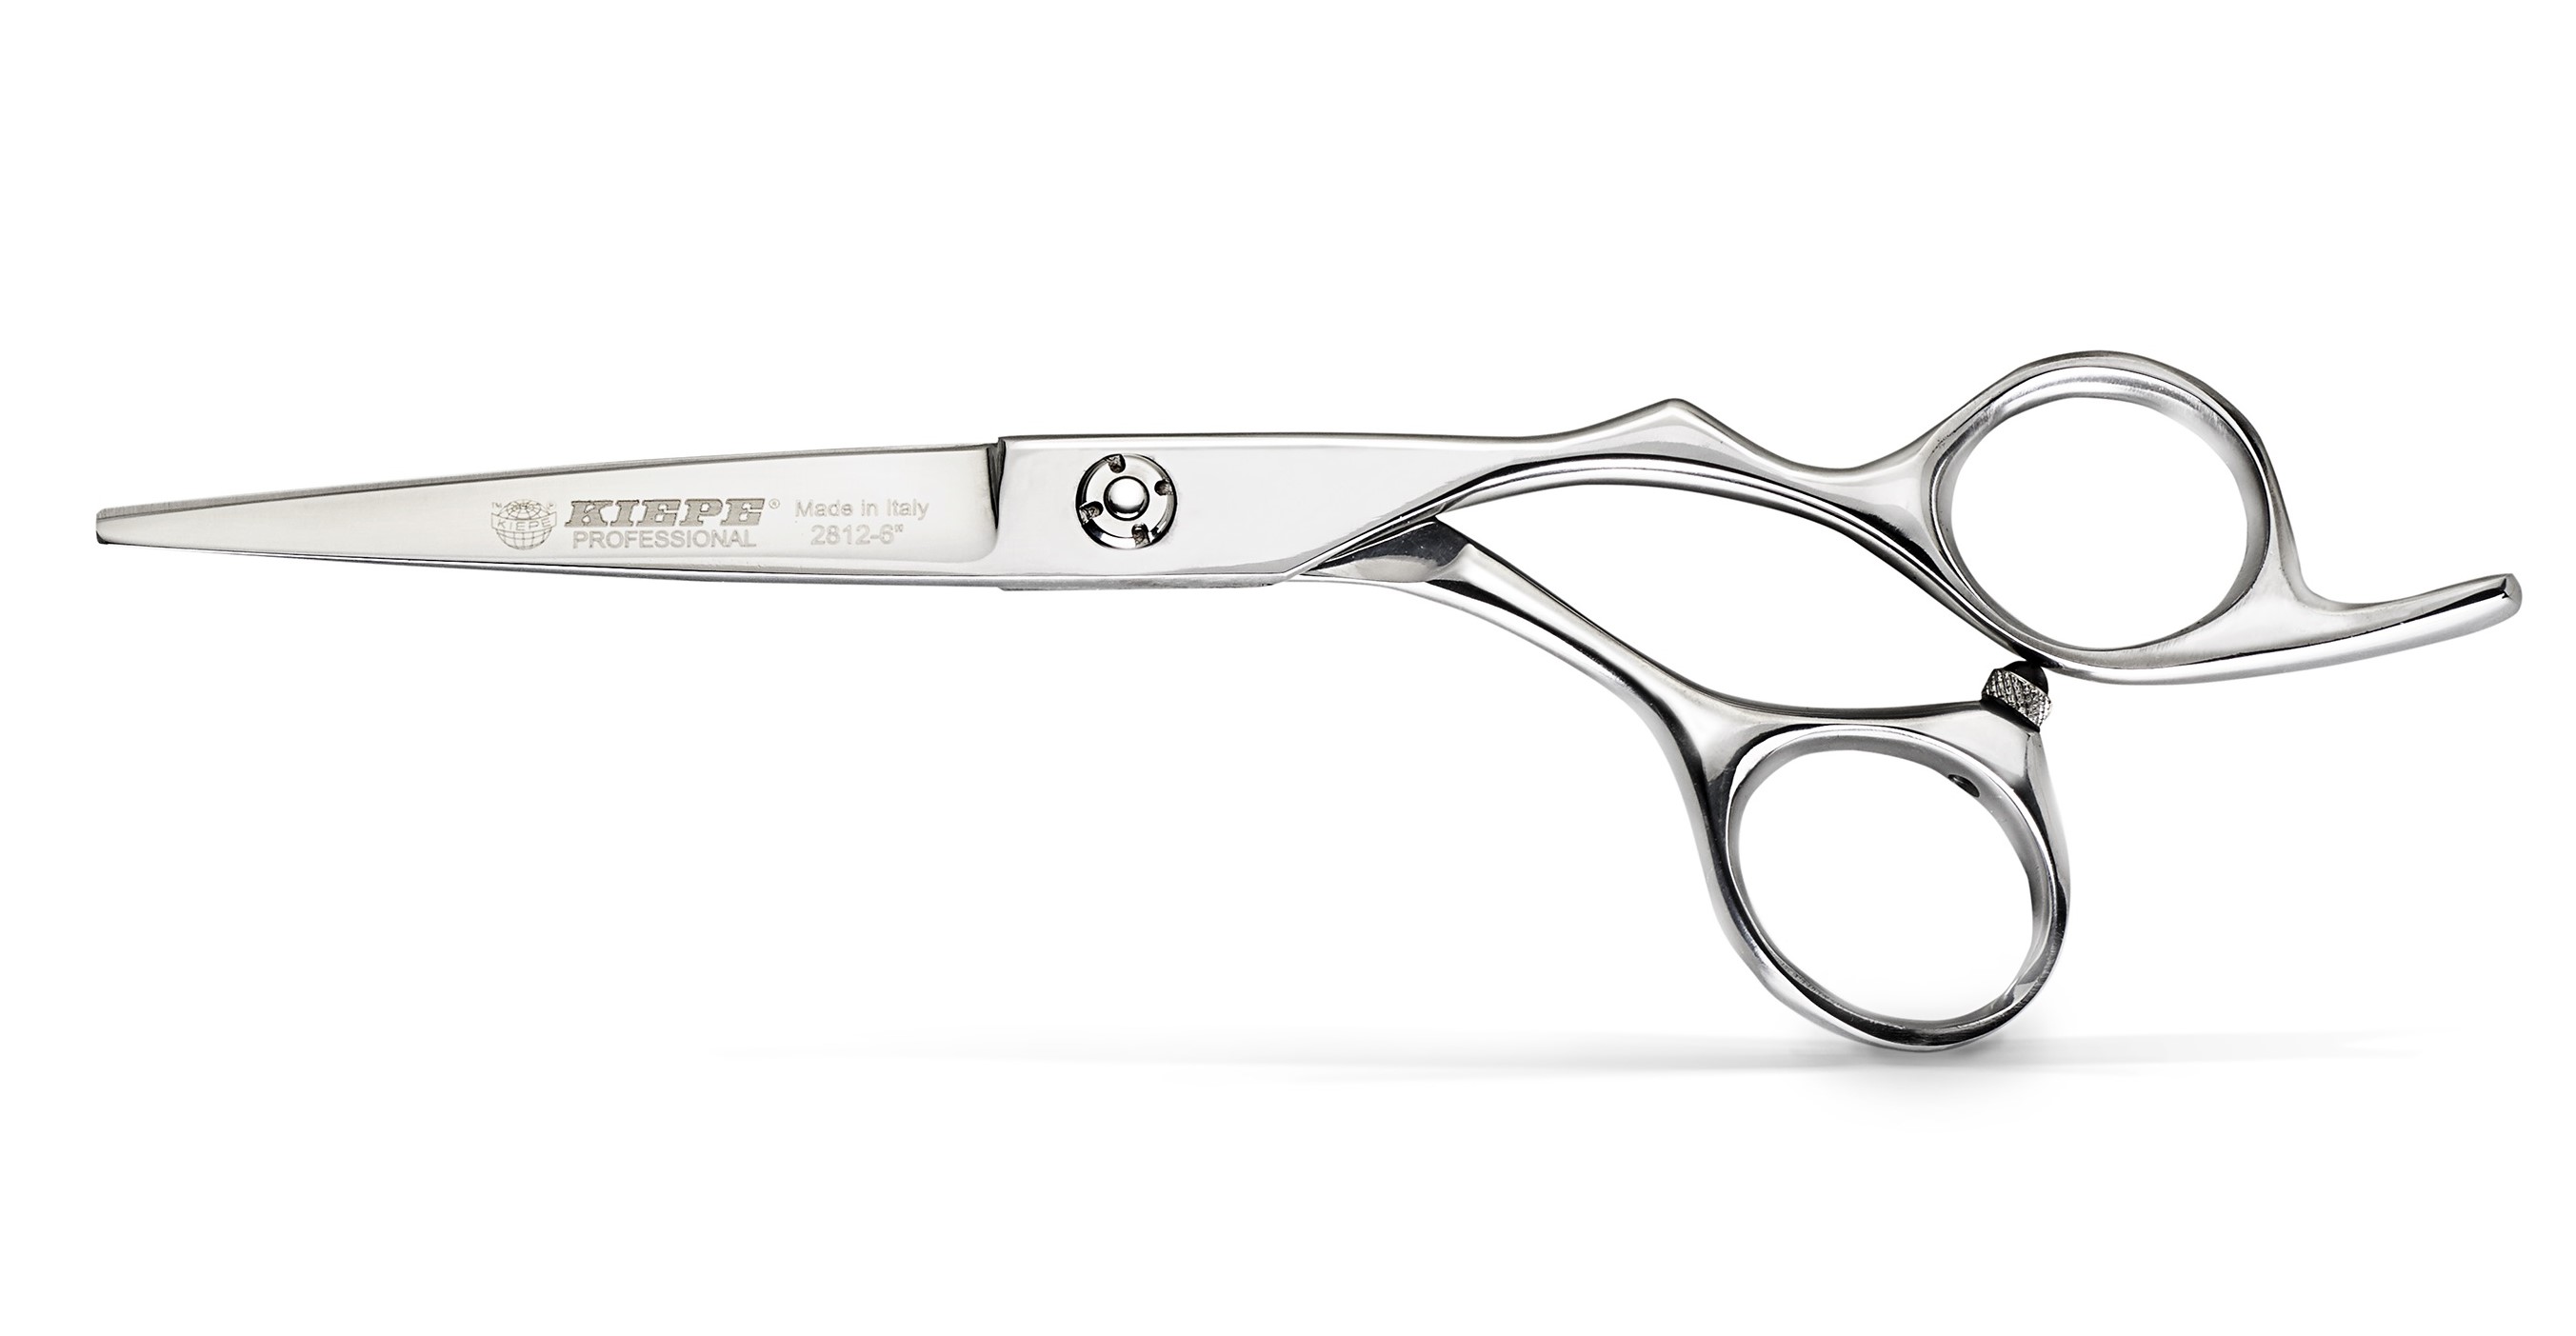 Kiepe Hairdresser Scissors Razor Edge Offset 2812 - profesionálne kadernícke nožnice